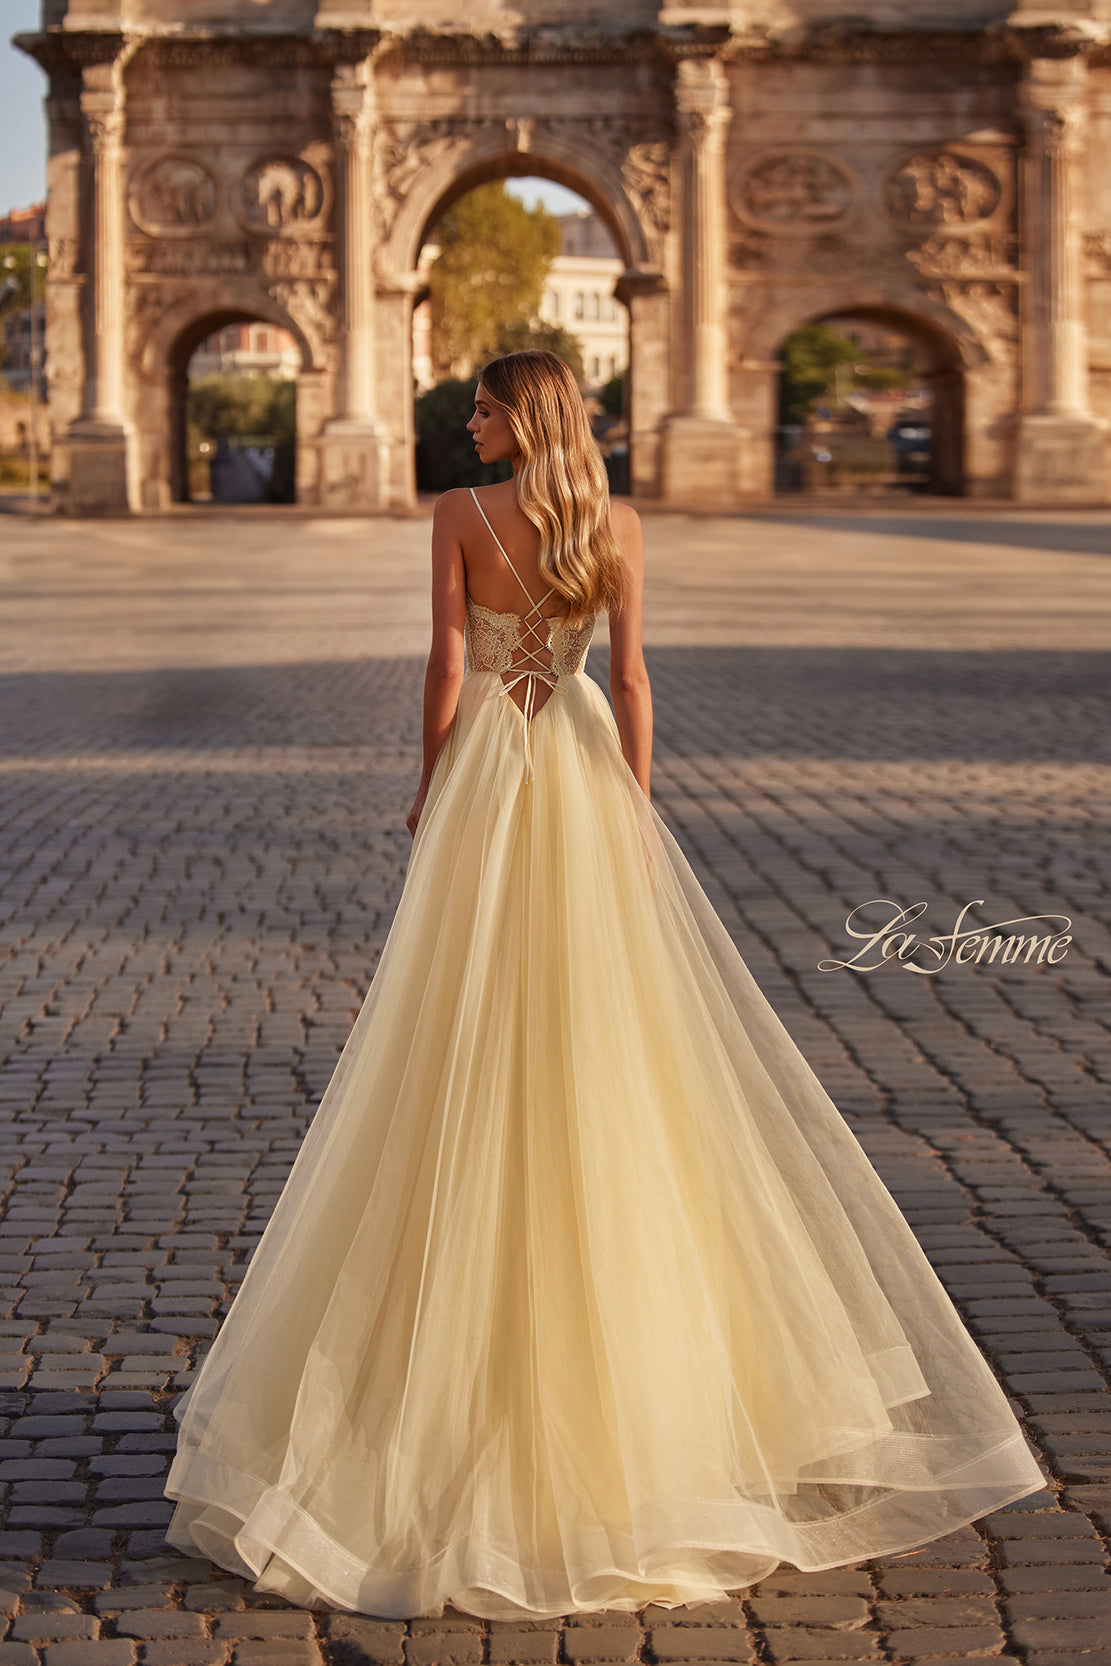 La-Femme-32306-V-Neck-Neckline-Criss-Cross-Back-High-Slit-Lace-Tulle-A-Line-Pale-Yellow-Evening-Dress-B-Chic-Fashion-Prom-Dress